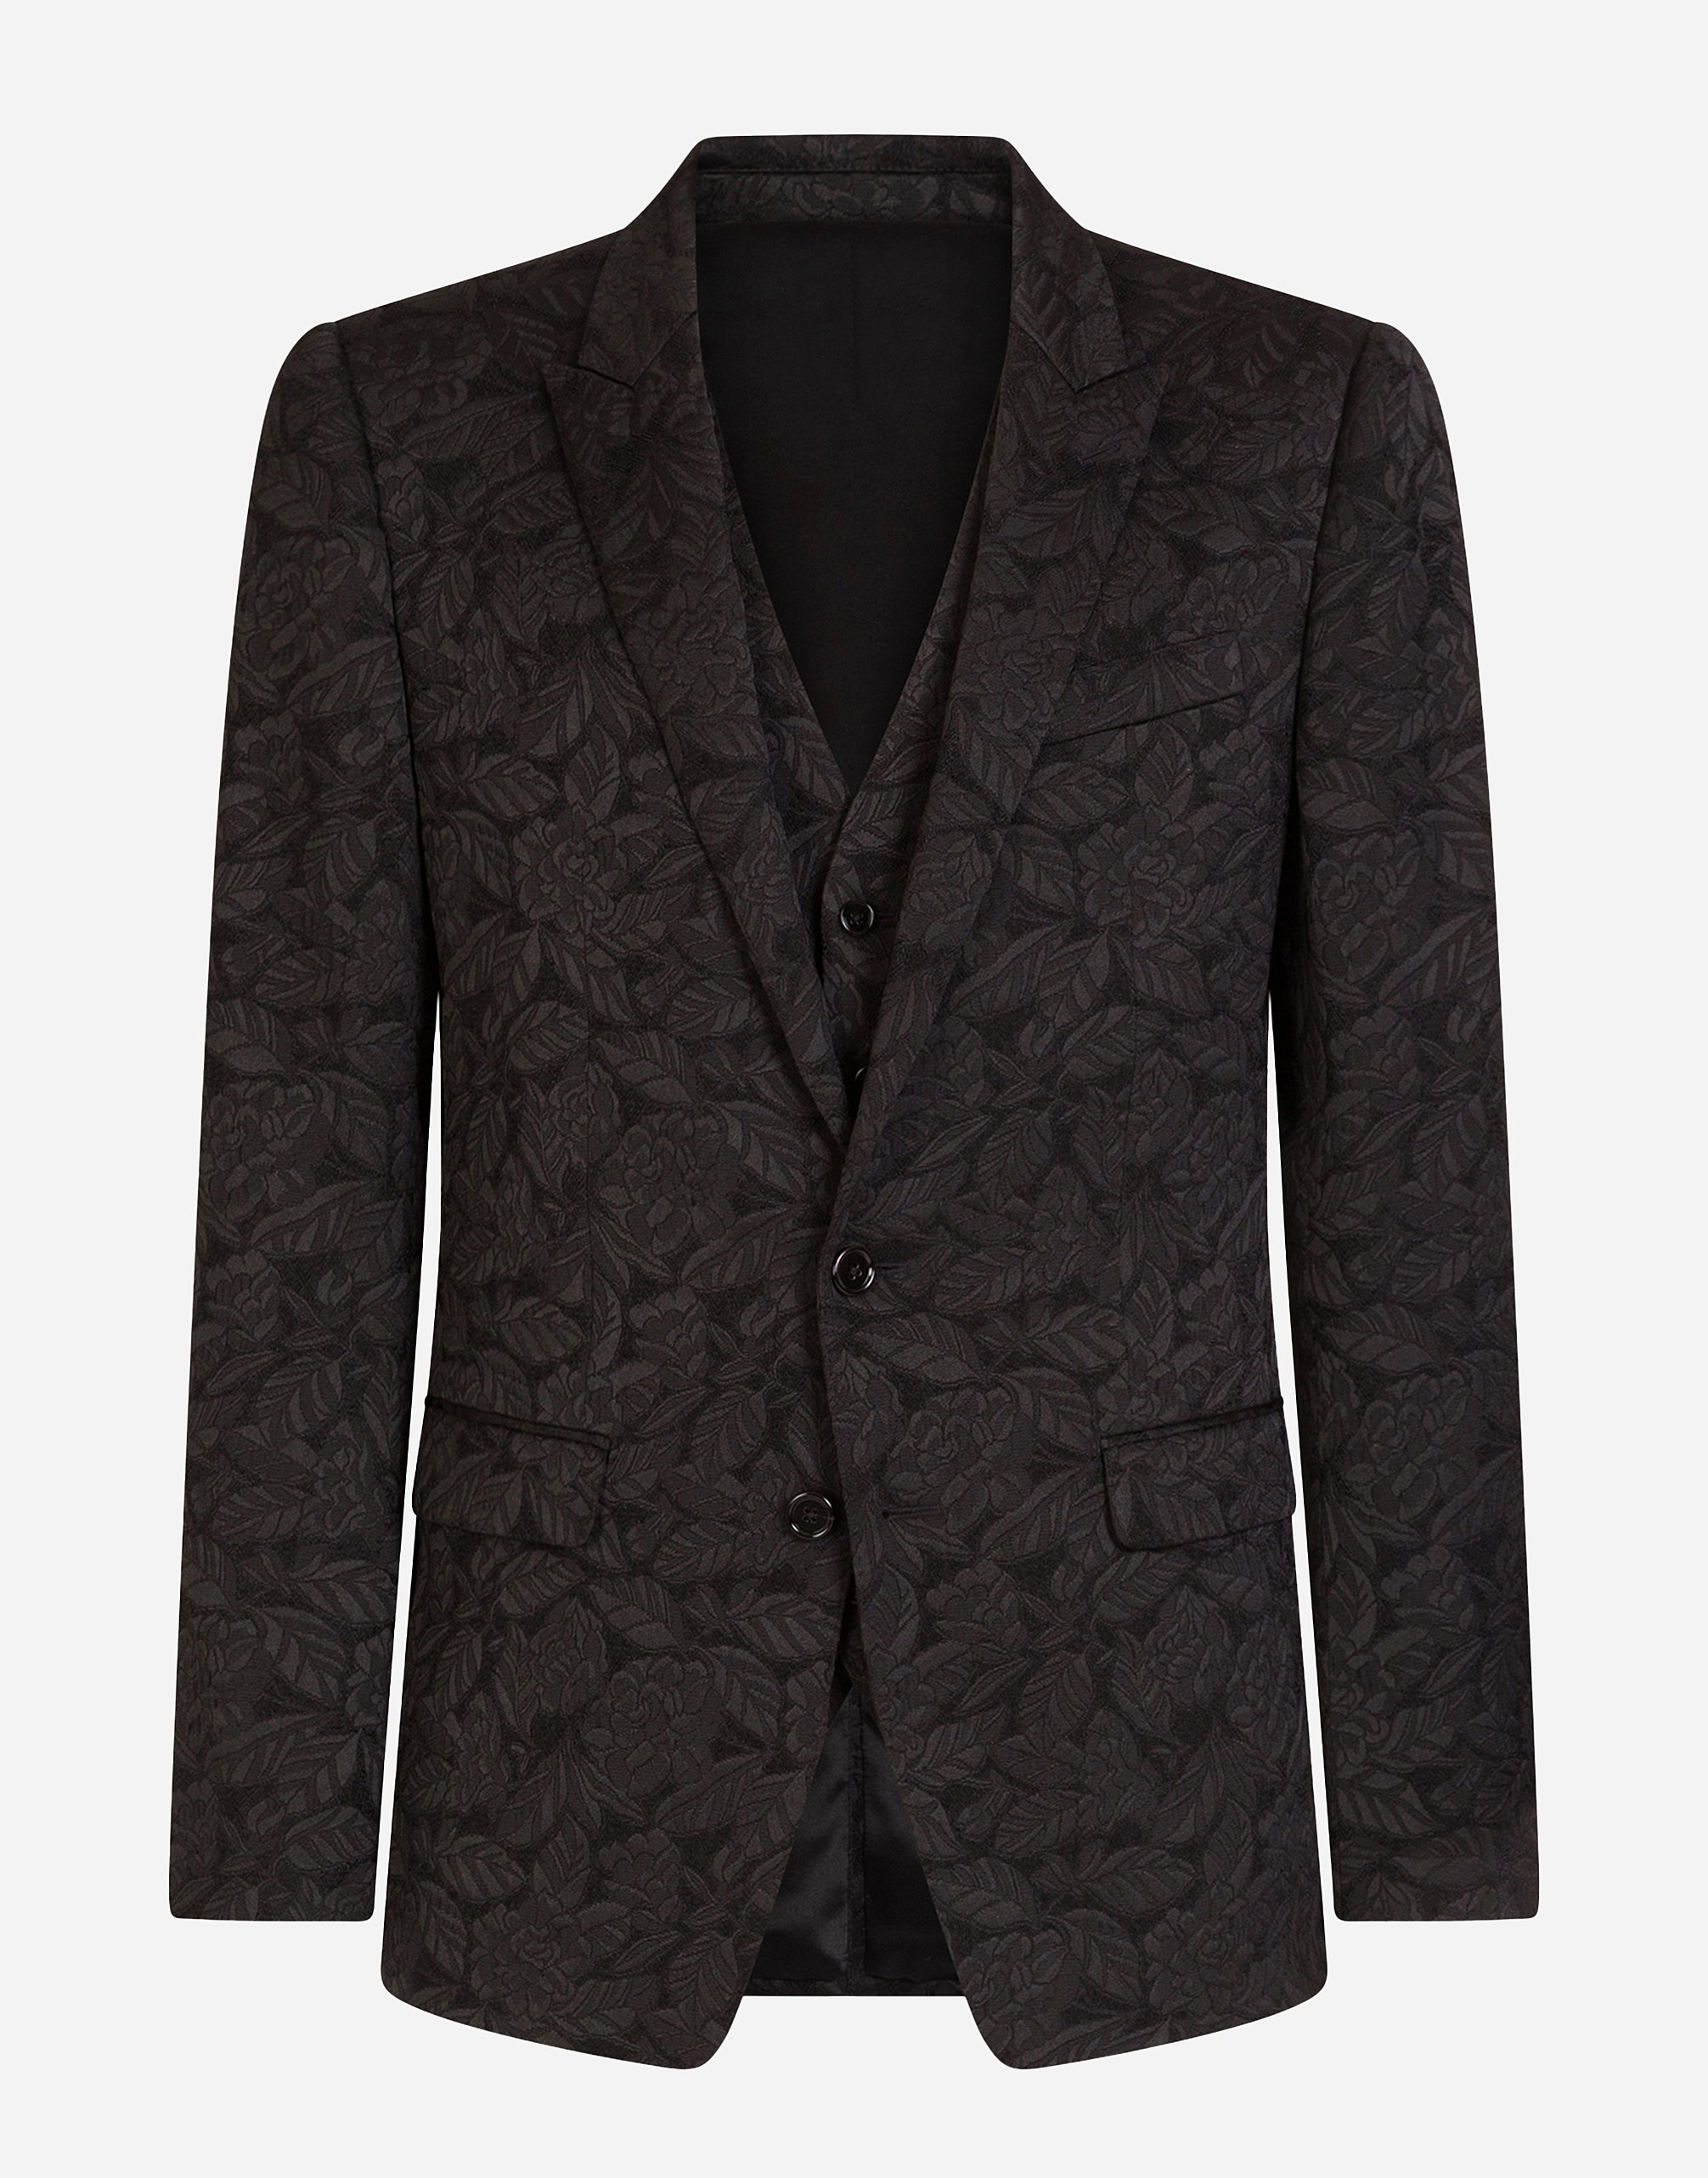 Floral jacquard Martini suit in Black